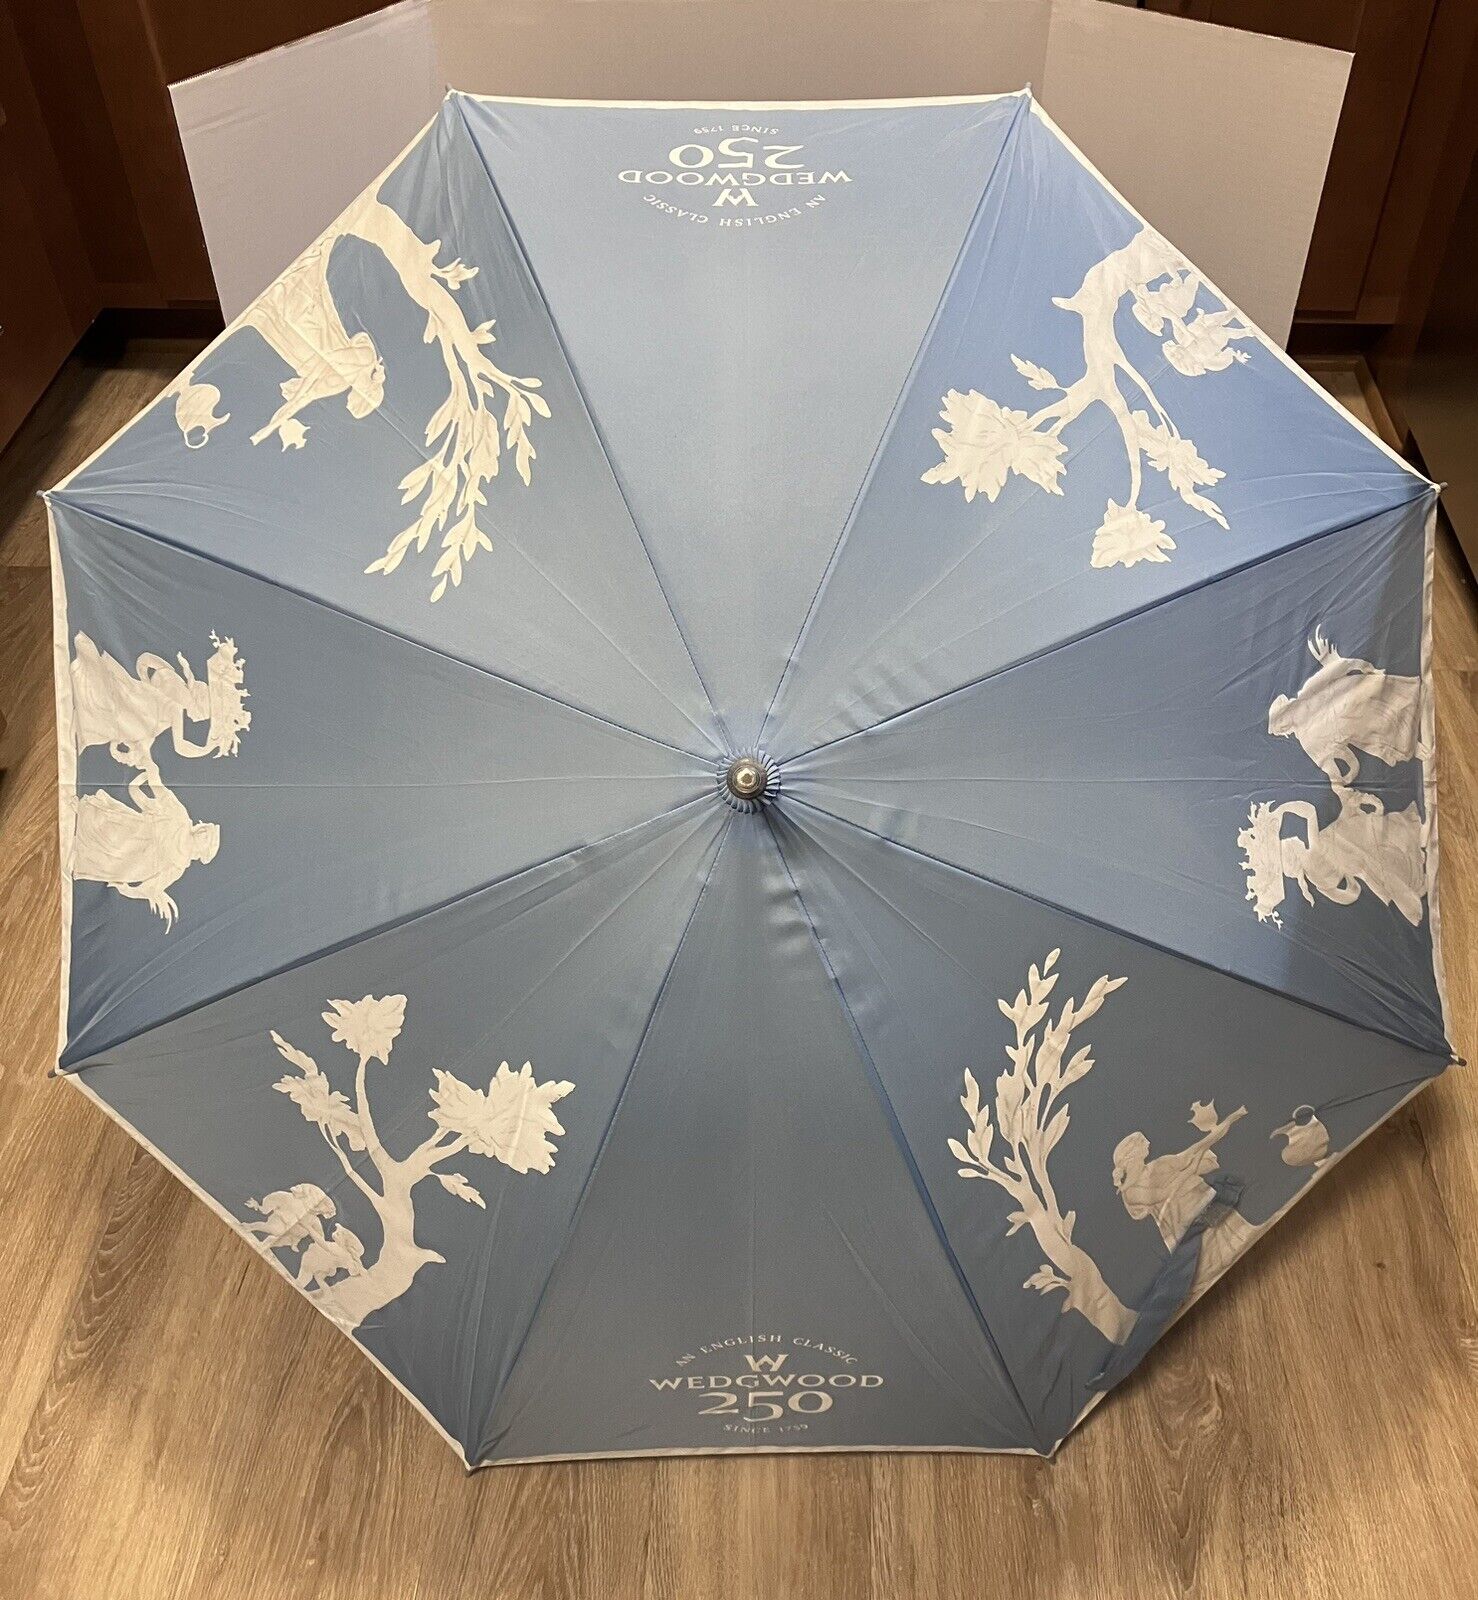 Wedgwood 250th Anniversary Rain Umbrella w/ Classical Scenes Light Blue & White